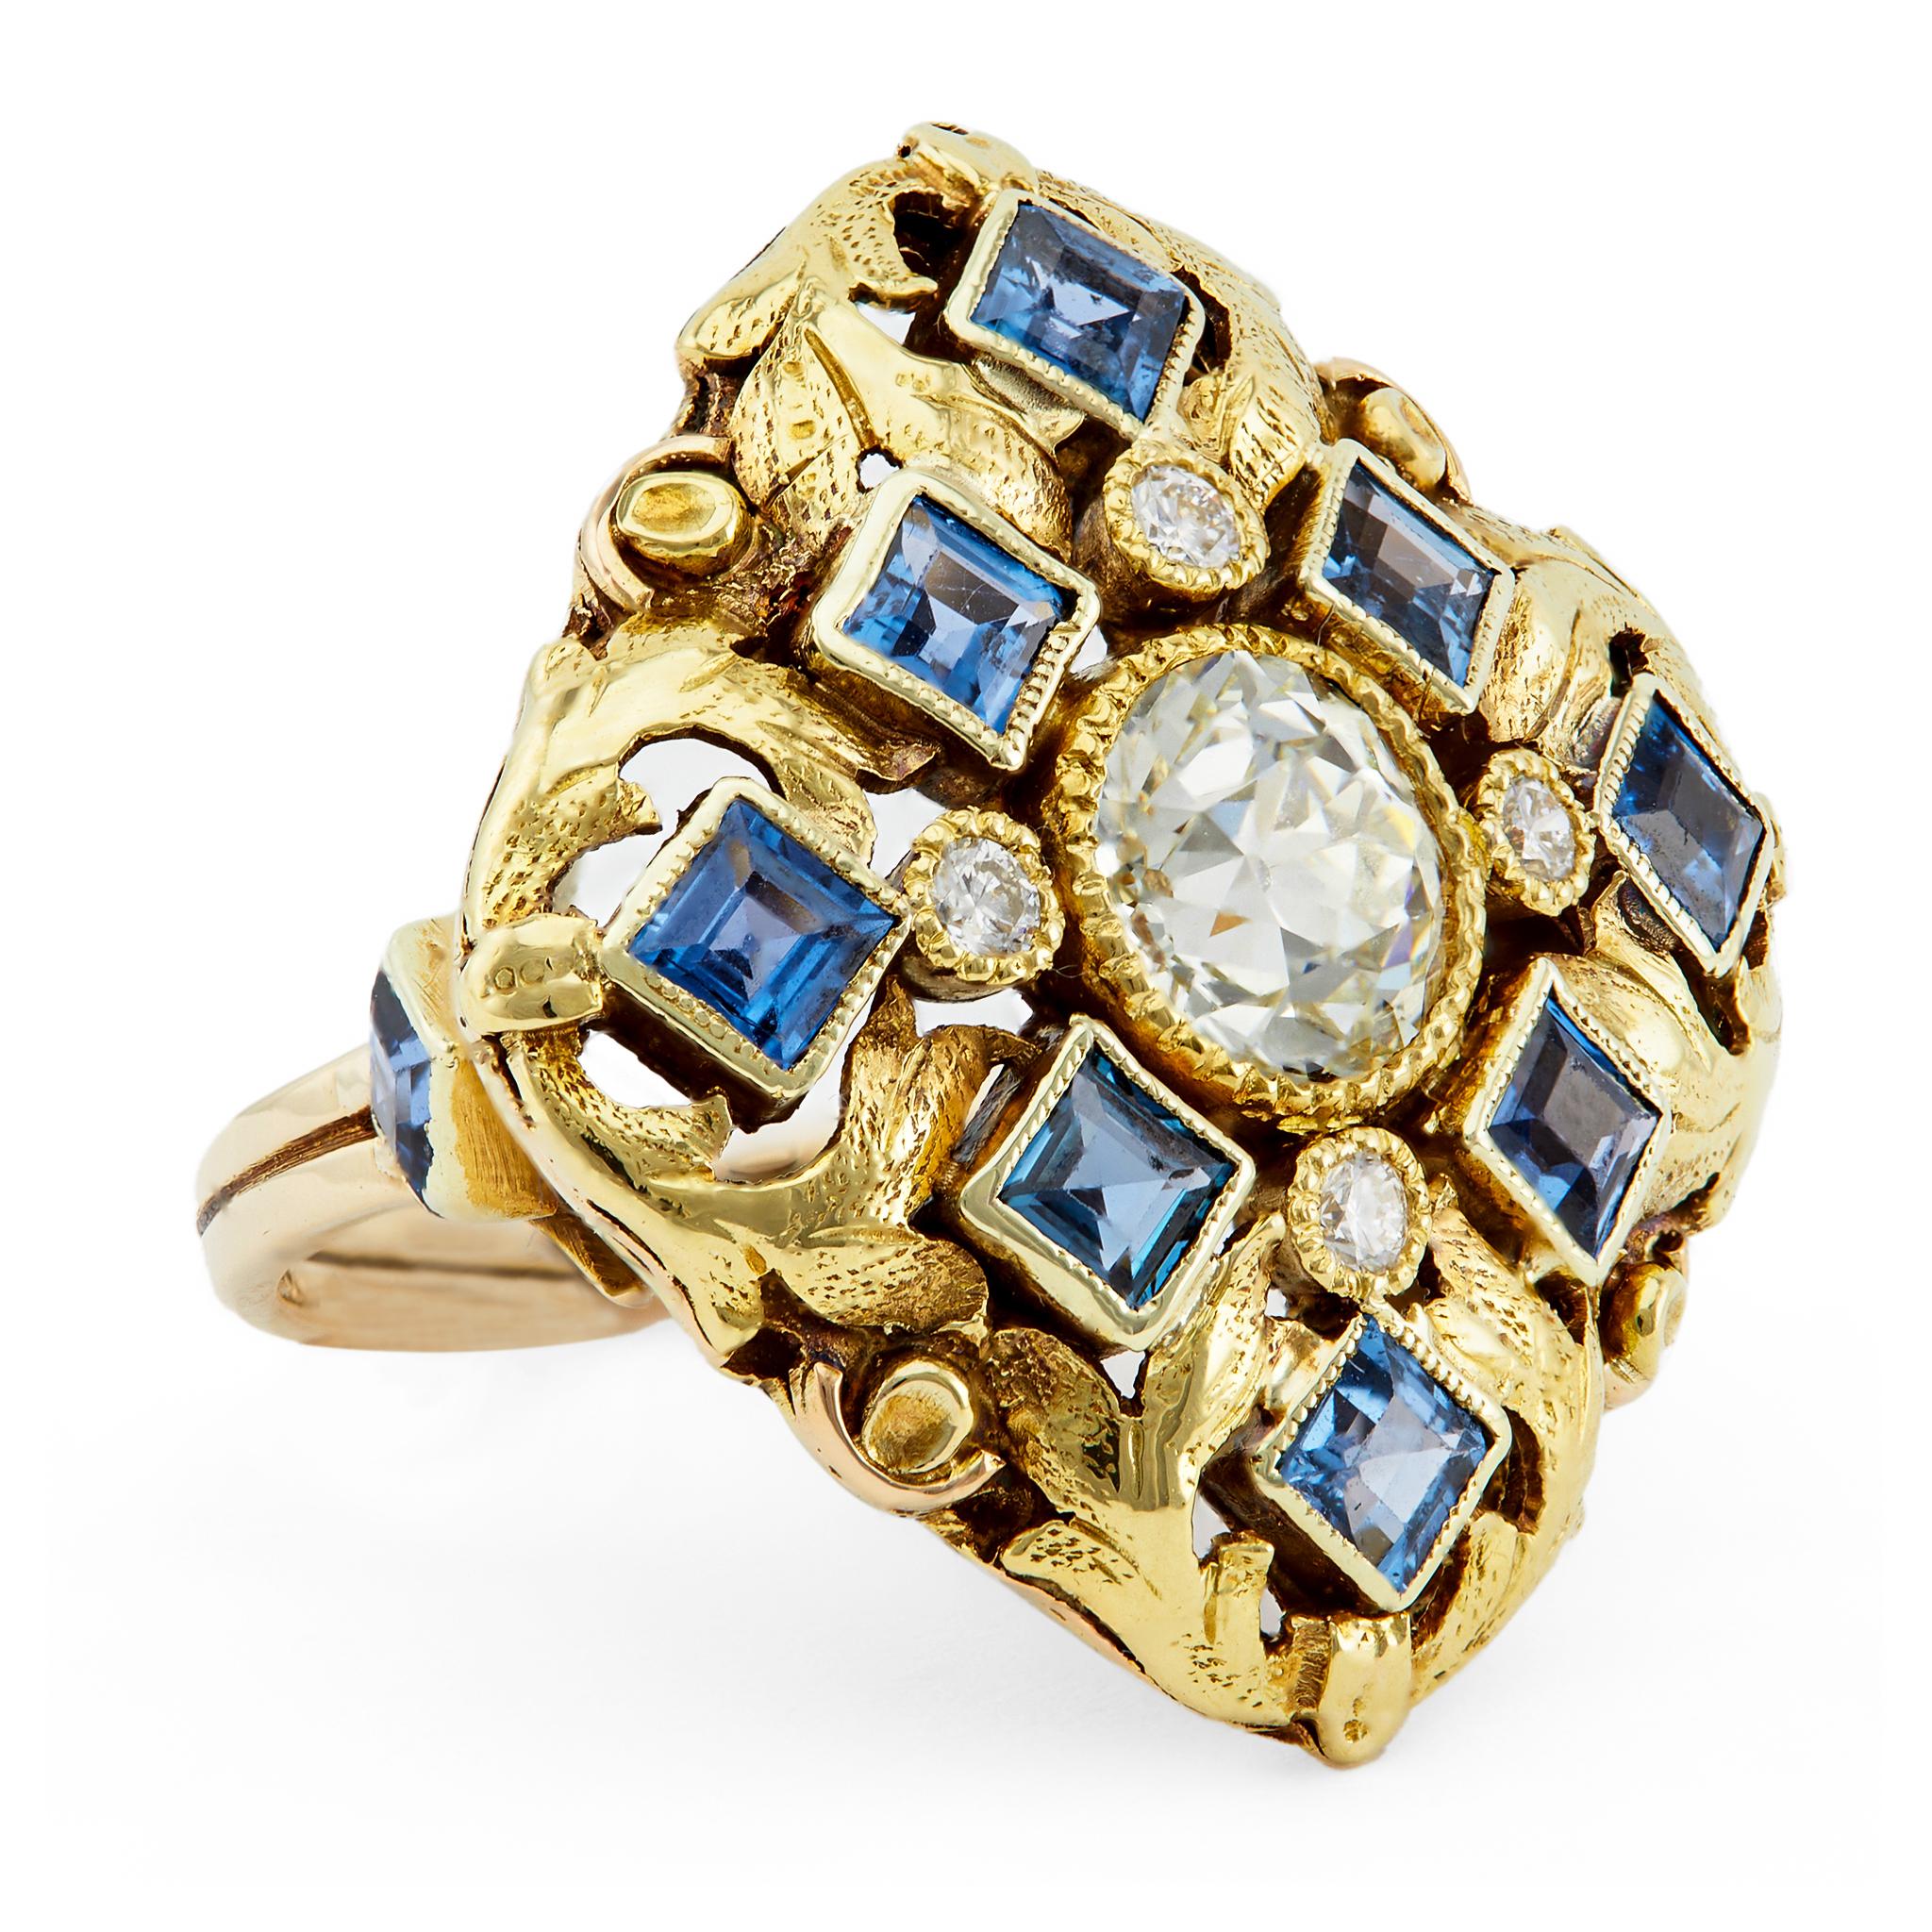 Women's or Men's Art Nouveau GIA 1.56 Carat Old European Diamond and Sapphire 14k Gold Ring